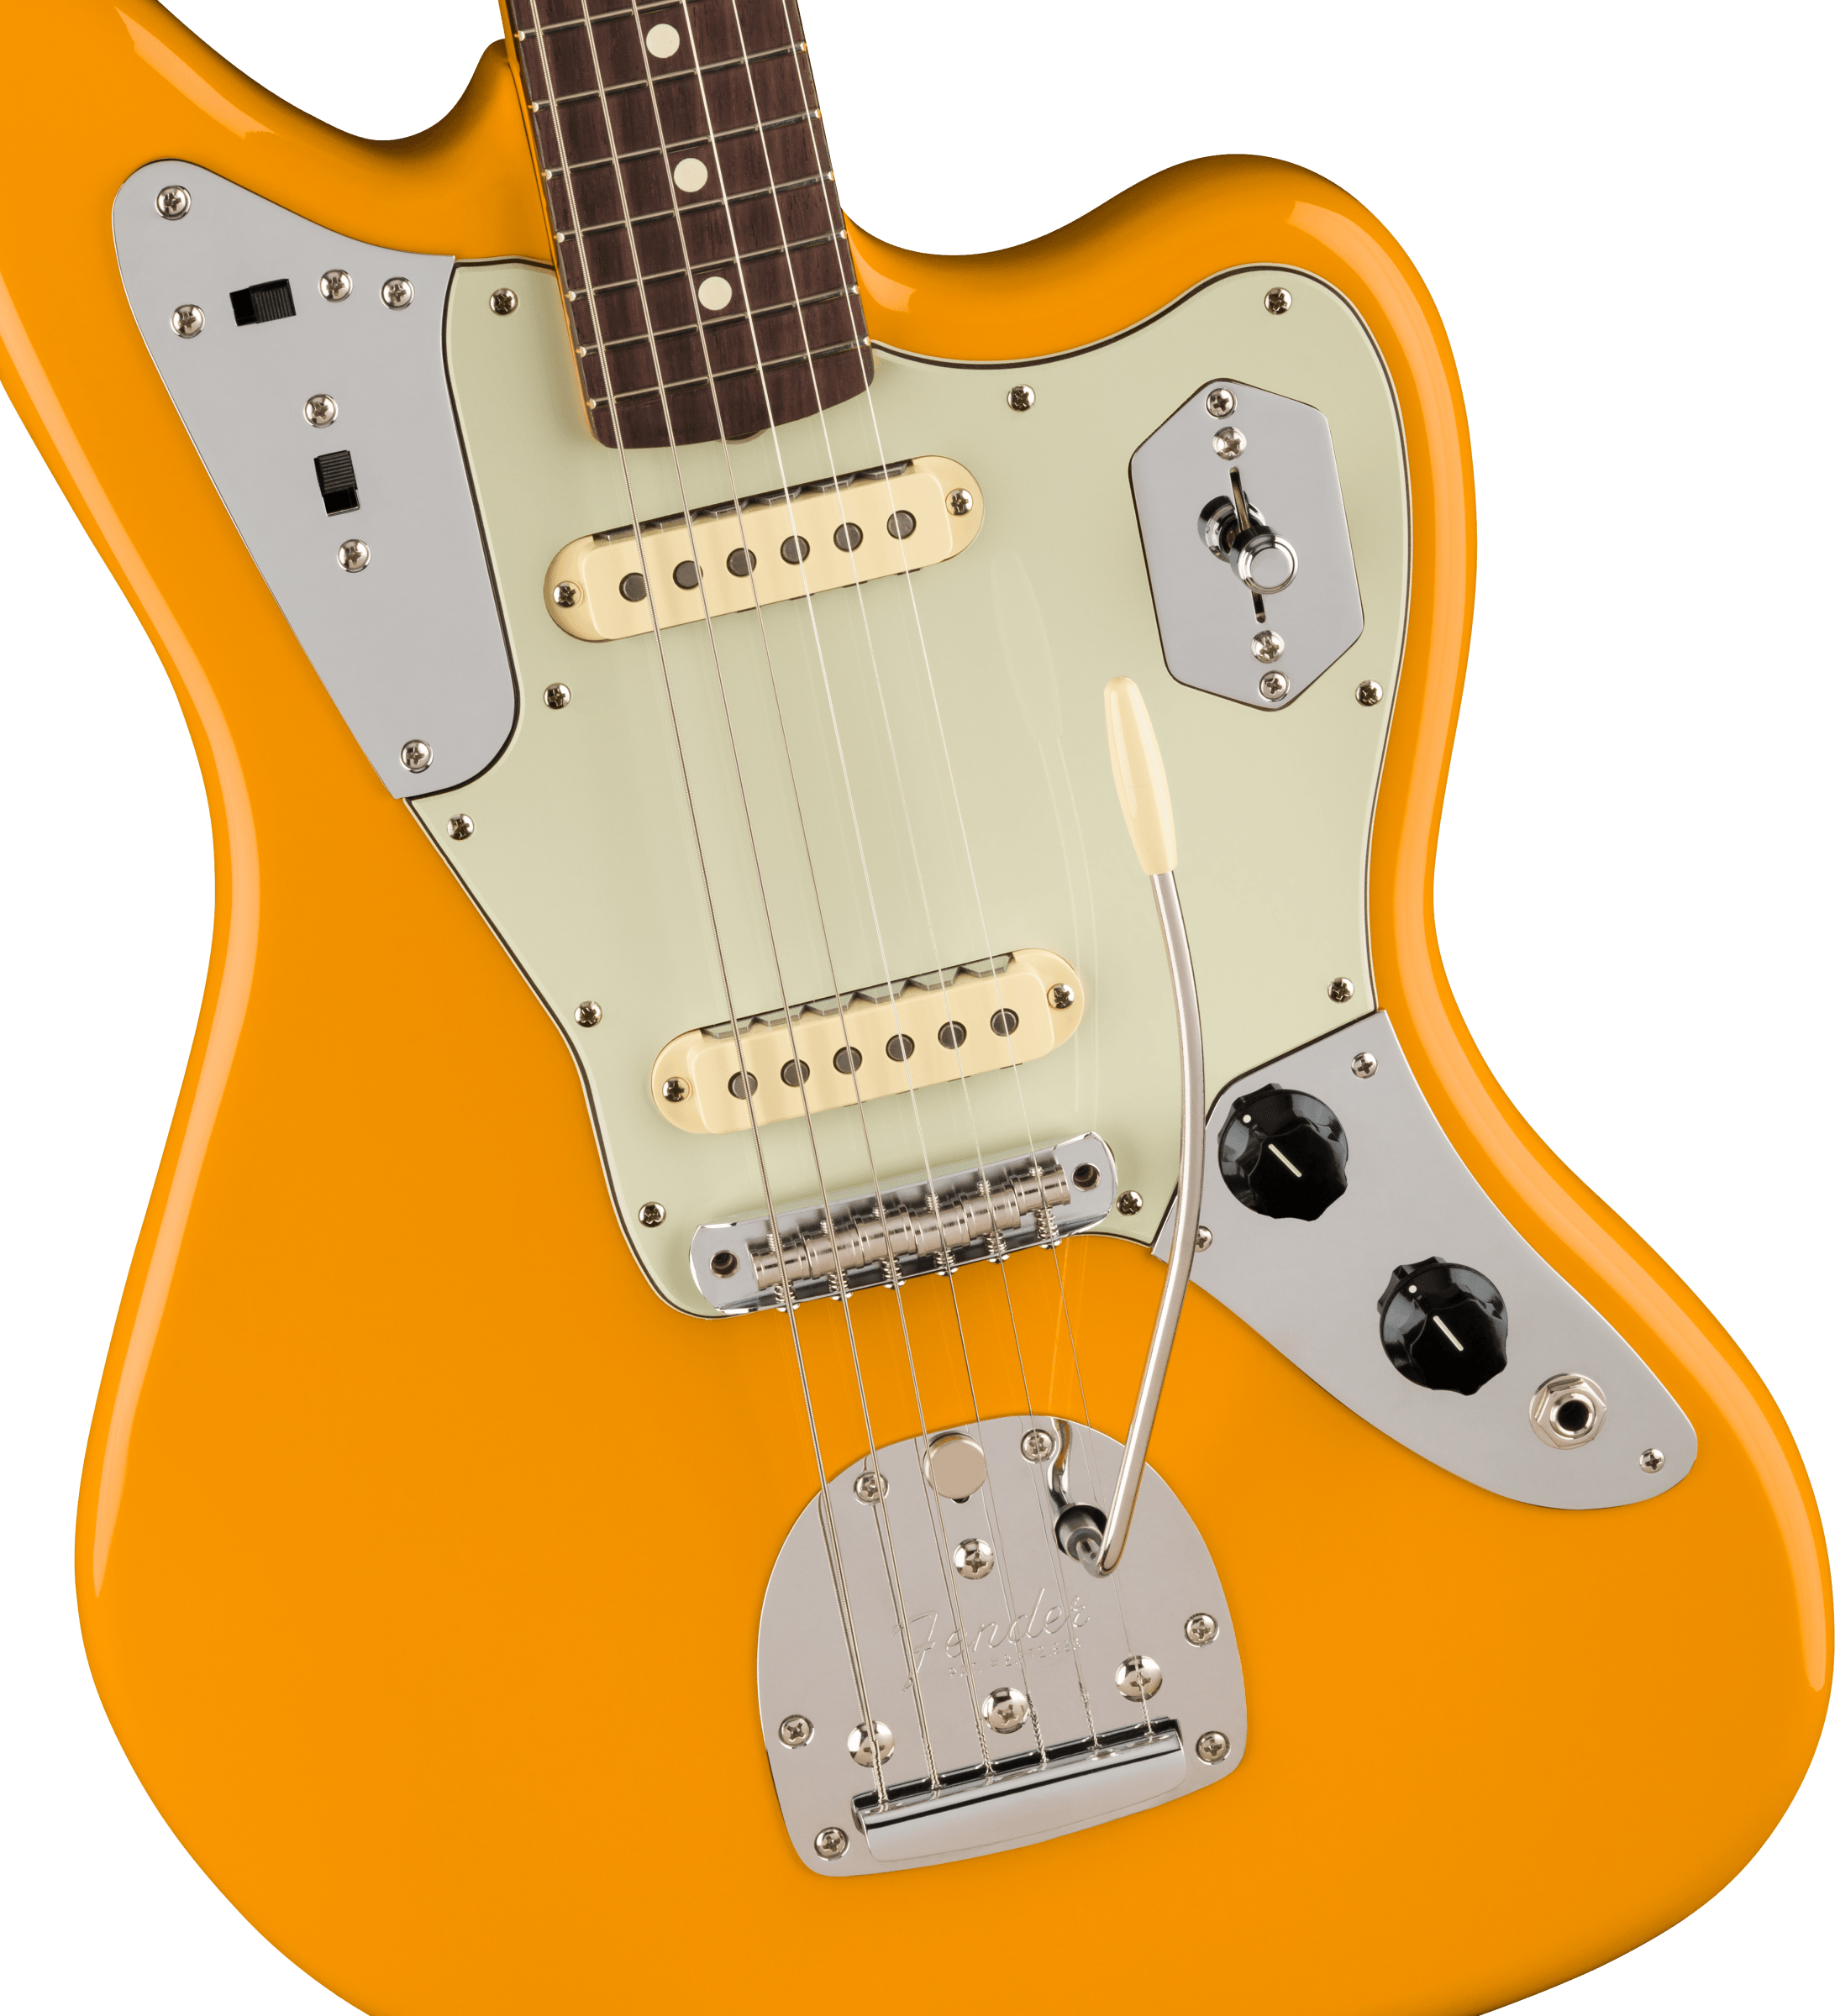 Fender Jaguar Johnny Marr Signature 2s Trem Rw - Fever Dream Yellow - Retro rock electric guitar - Variation 2